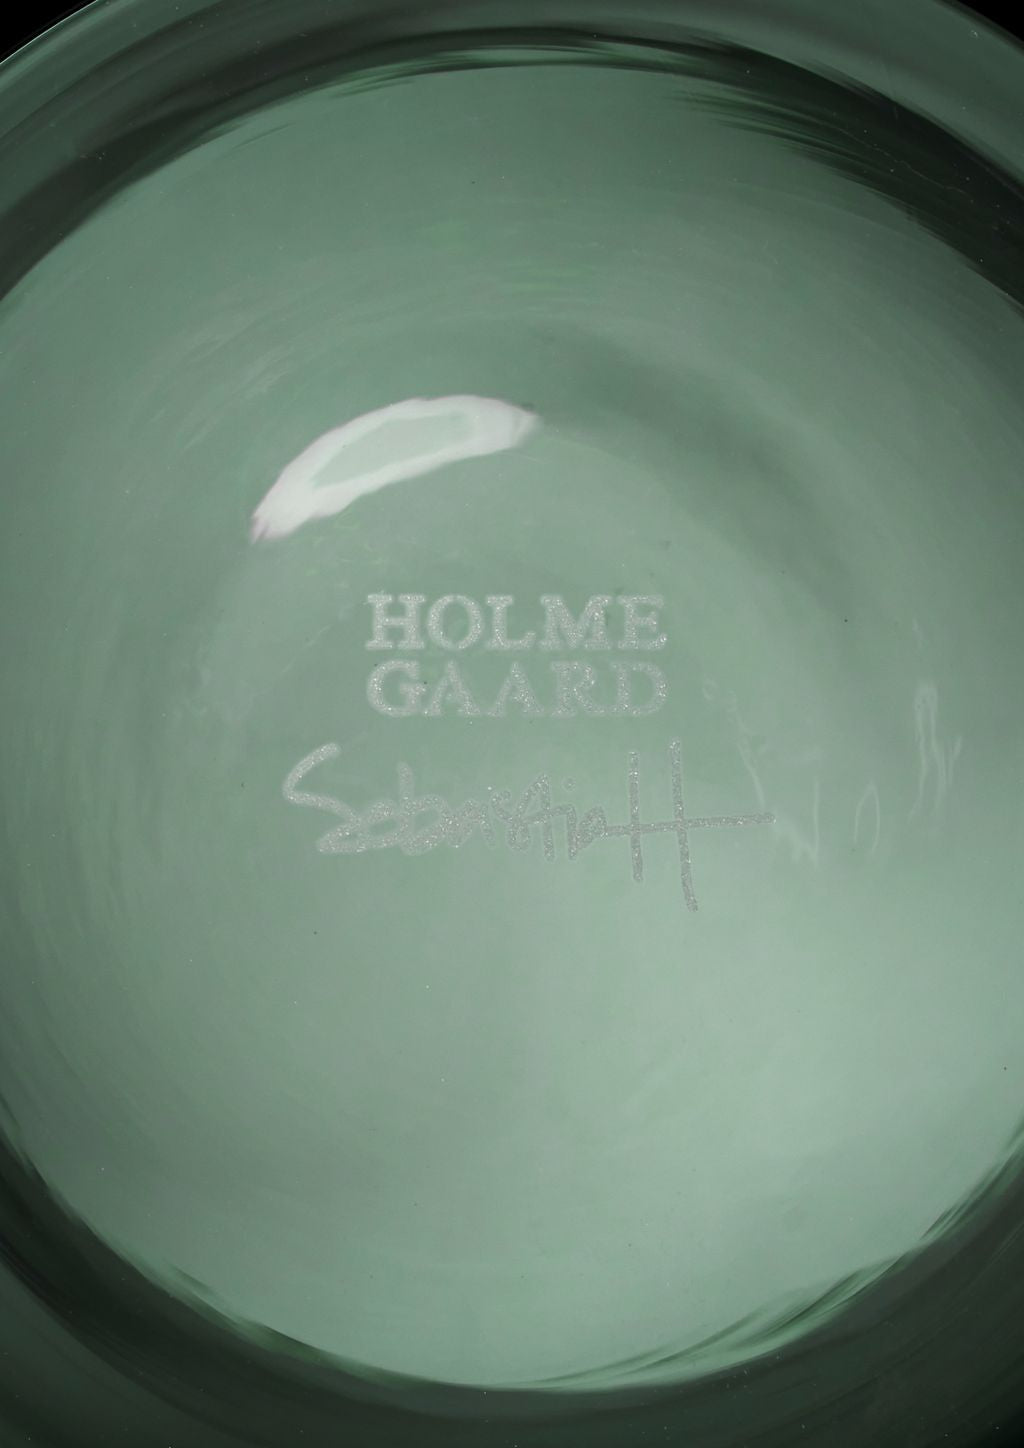 Holmegaard Kaari -maljakko H21 cm, tummanvihreä